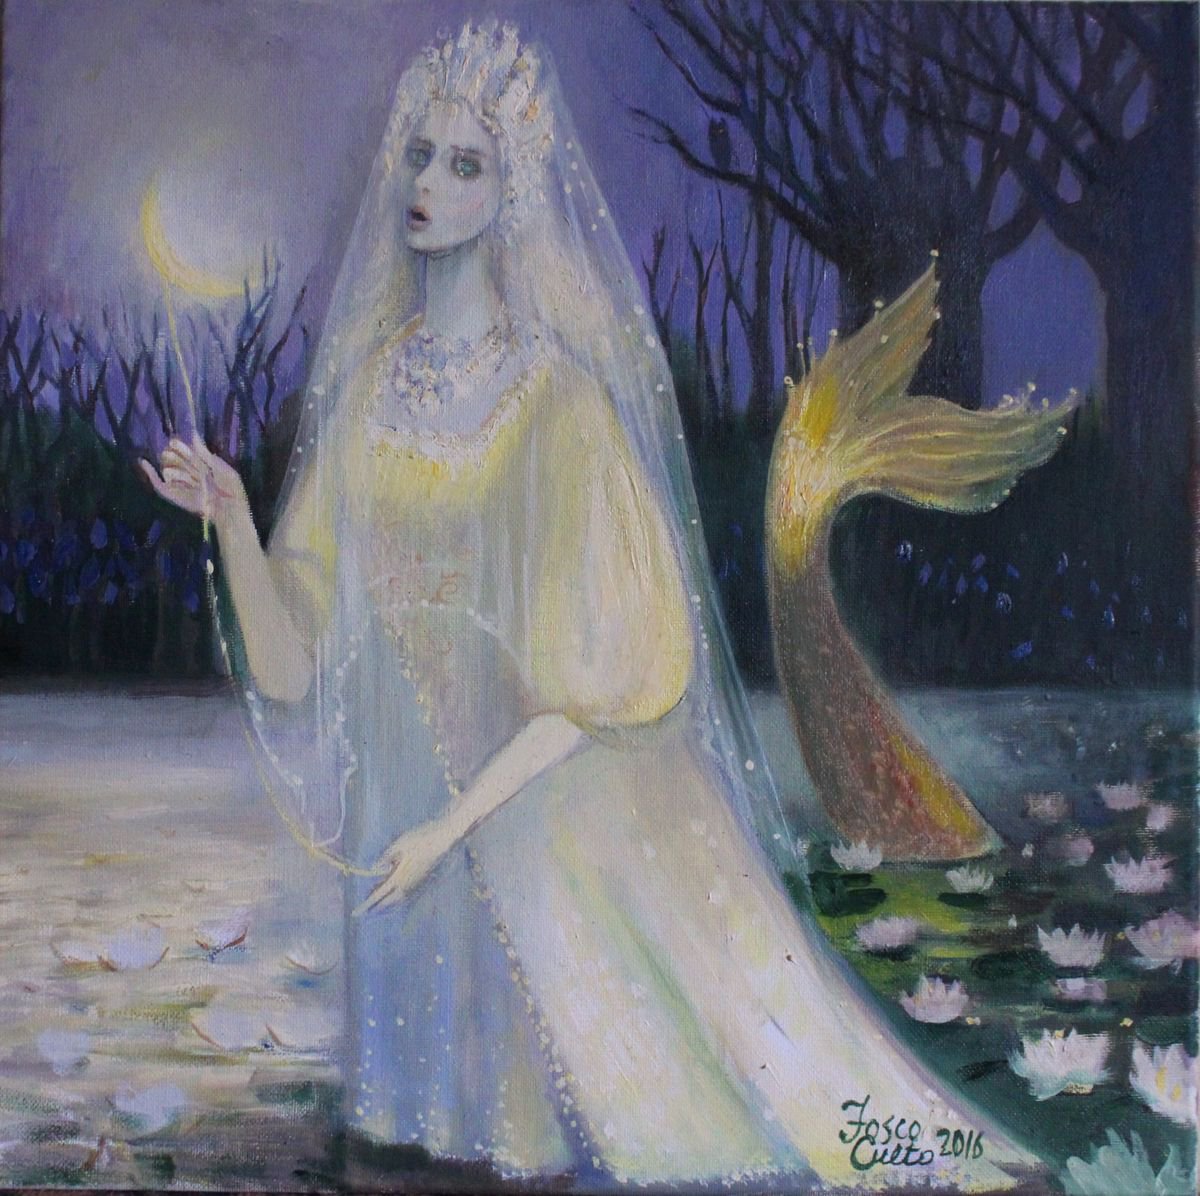 Princess of the Swamp by Fosco Culto